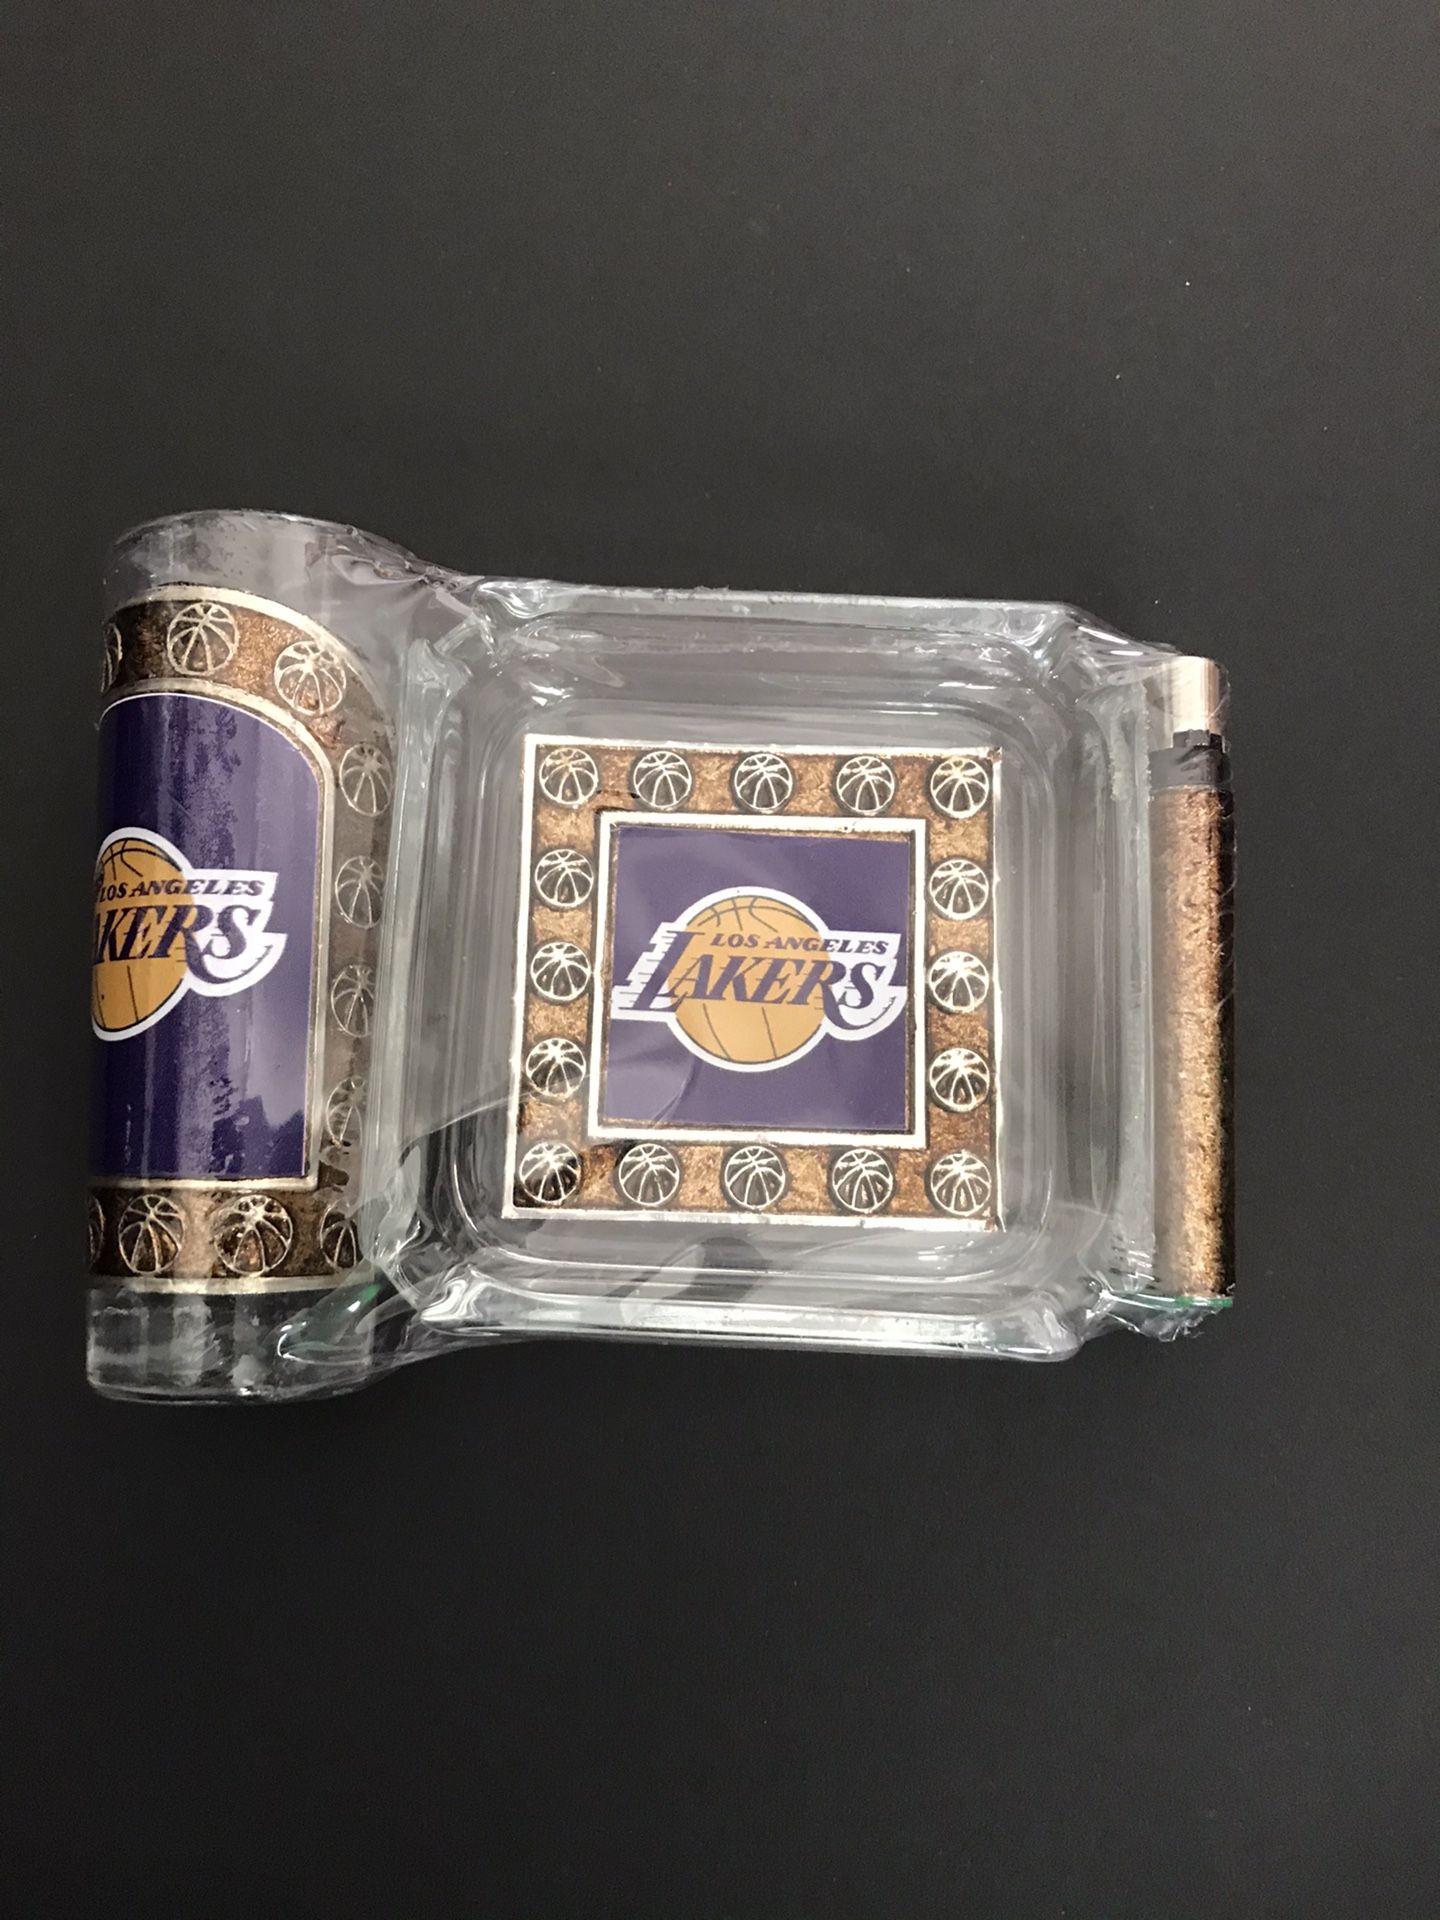 Los Angeles Lakers ashtray set